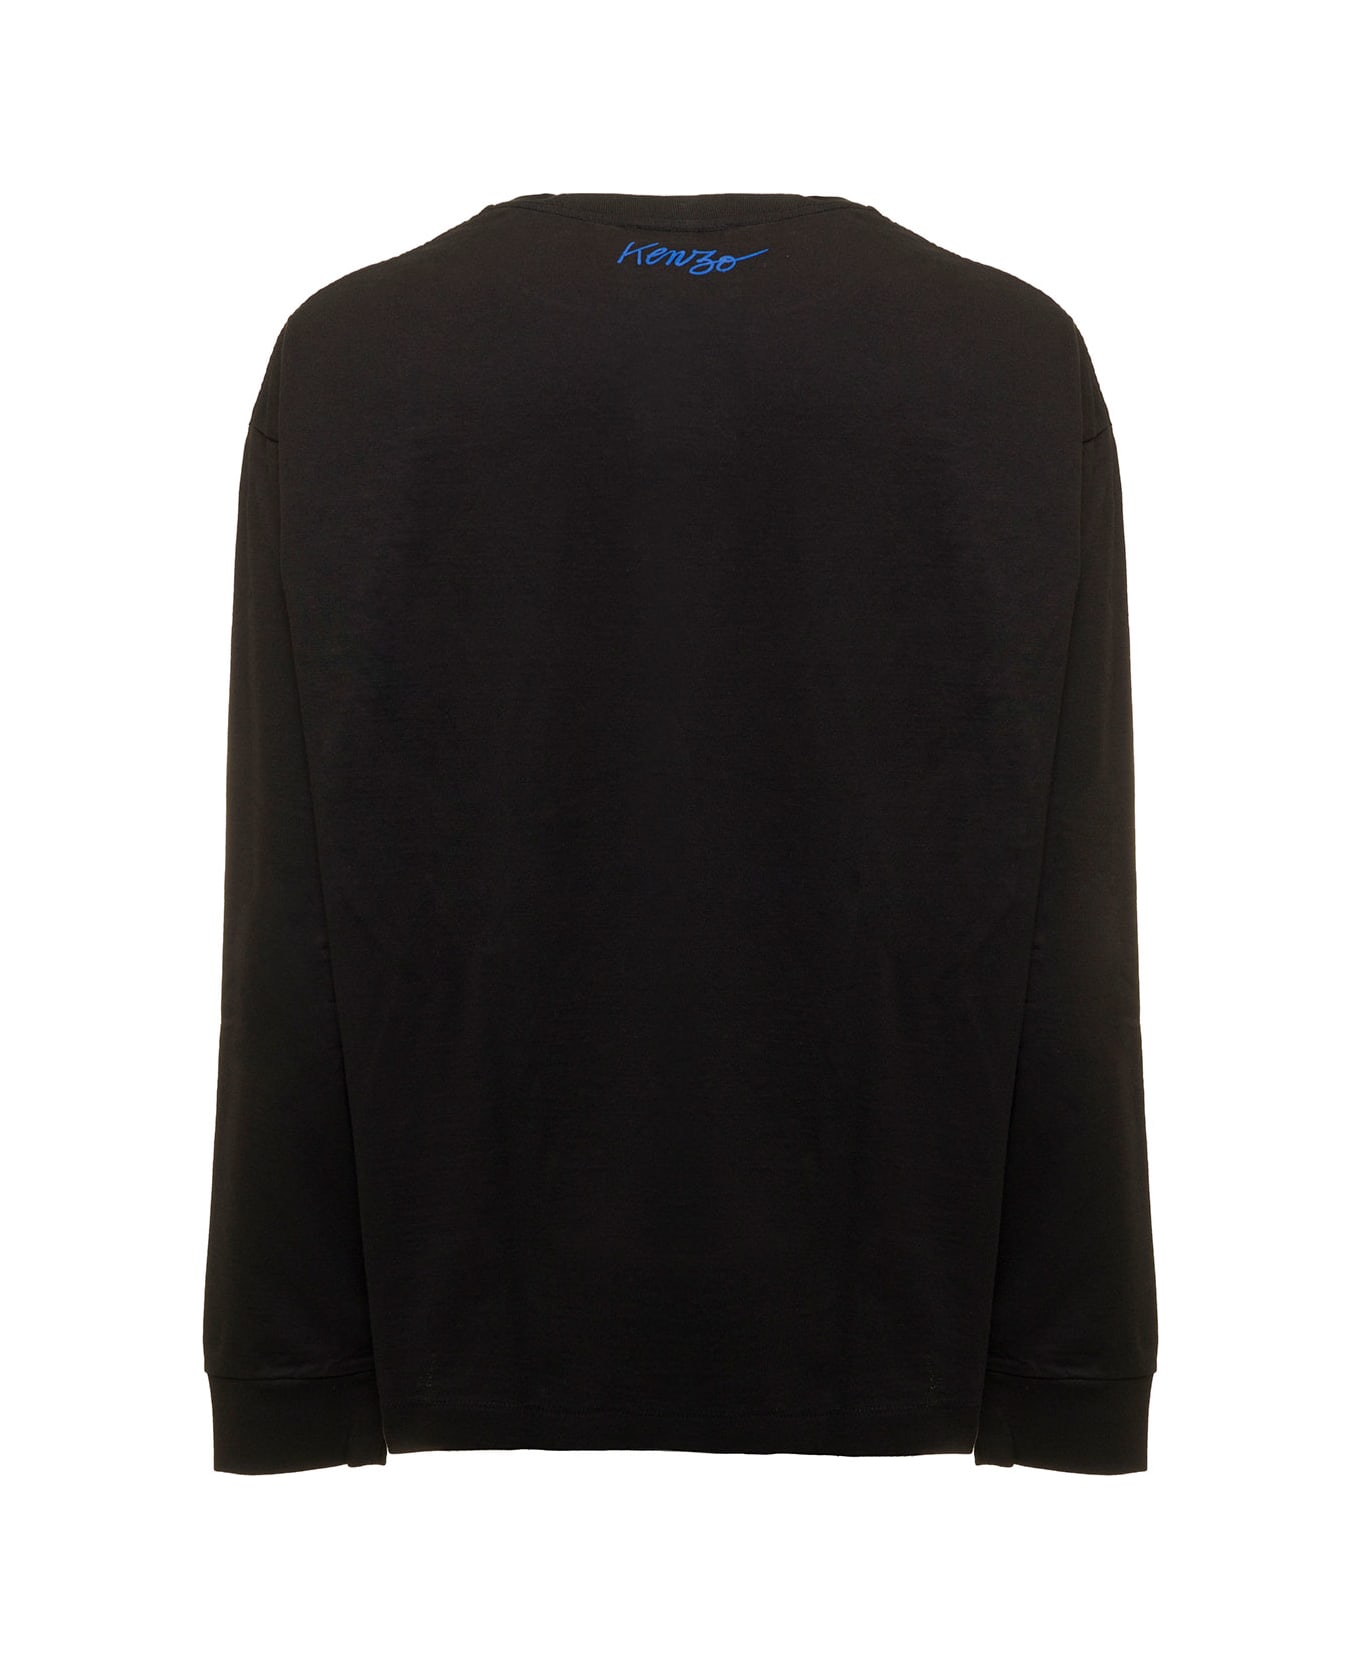 Kenzo Seasonal  Black Cotton Sweatshirtwith With office-accessories Print Kenzo Man - Black